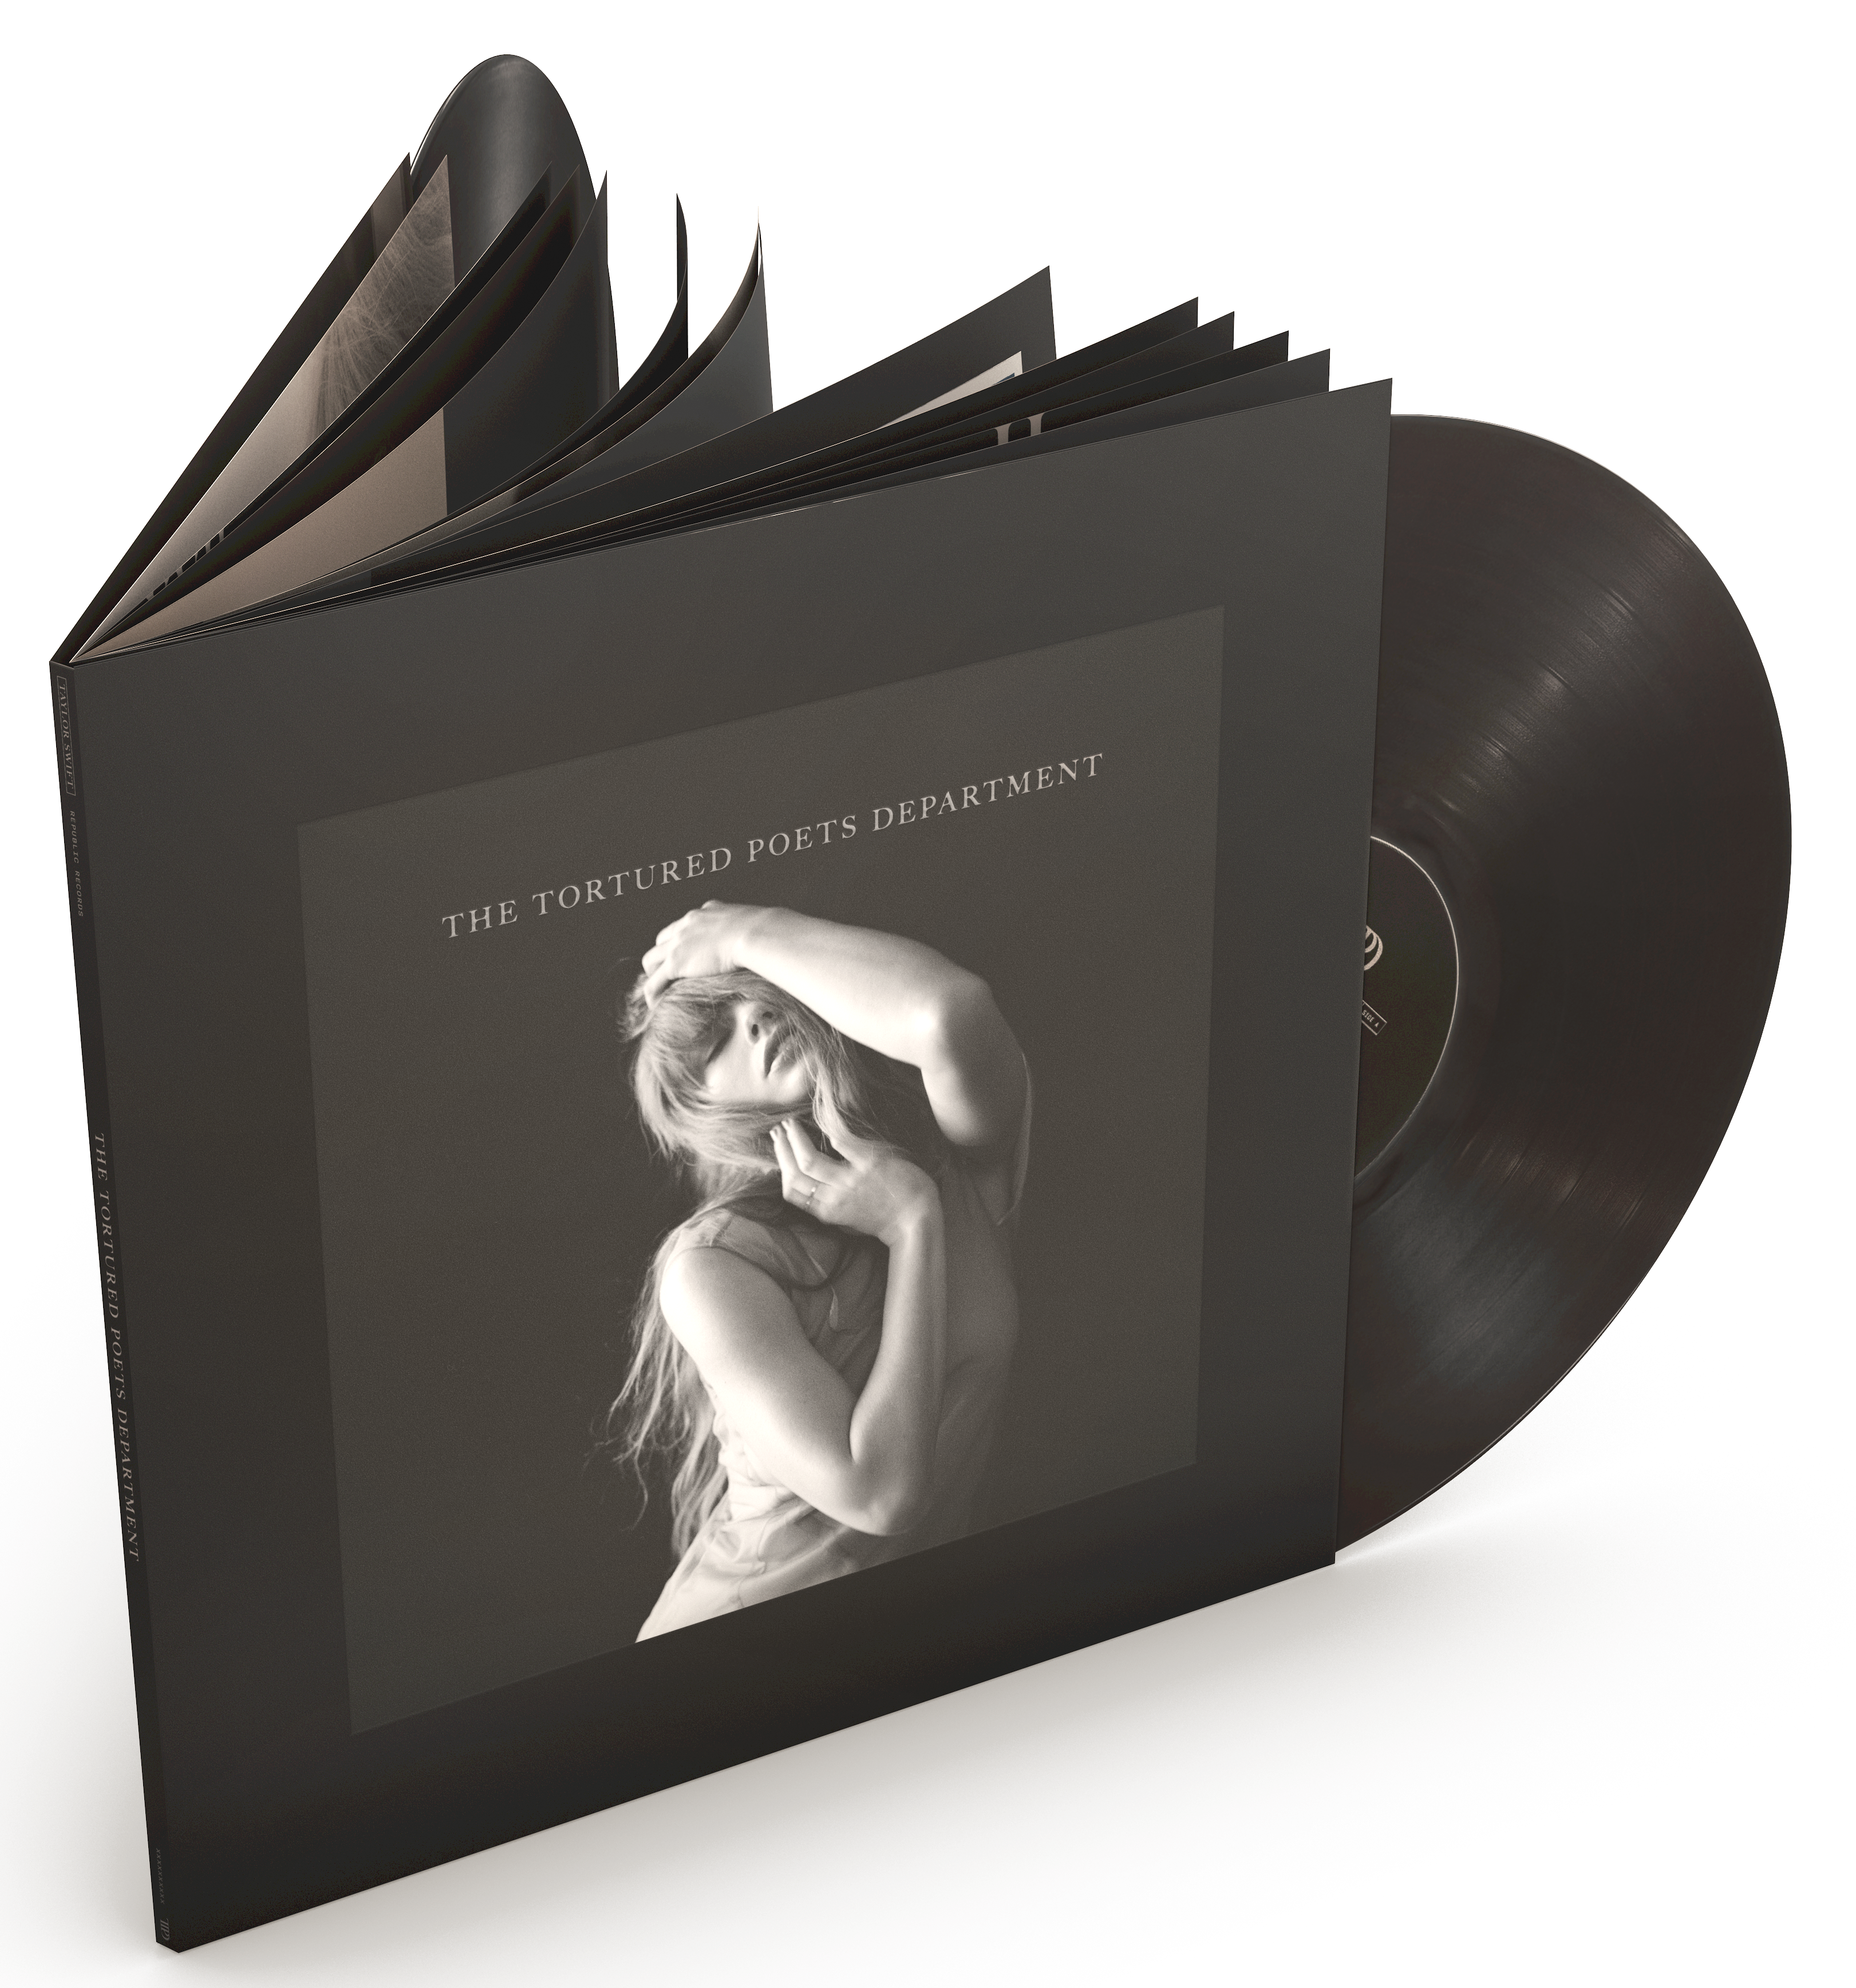 Taylor Swift - The Tortured Poets Department Special Edition Vinyl + Bonus Track "The Black Dog"